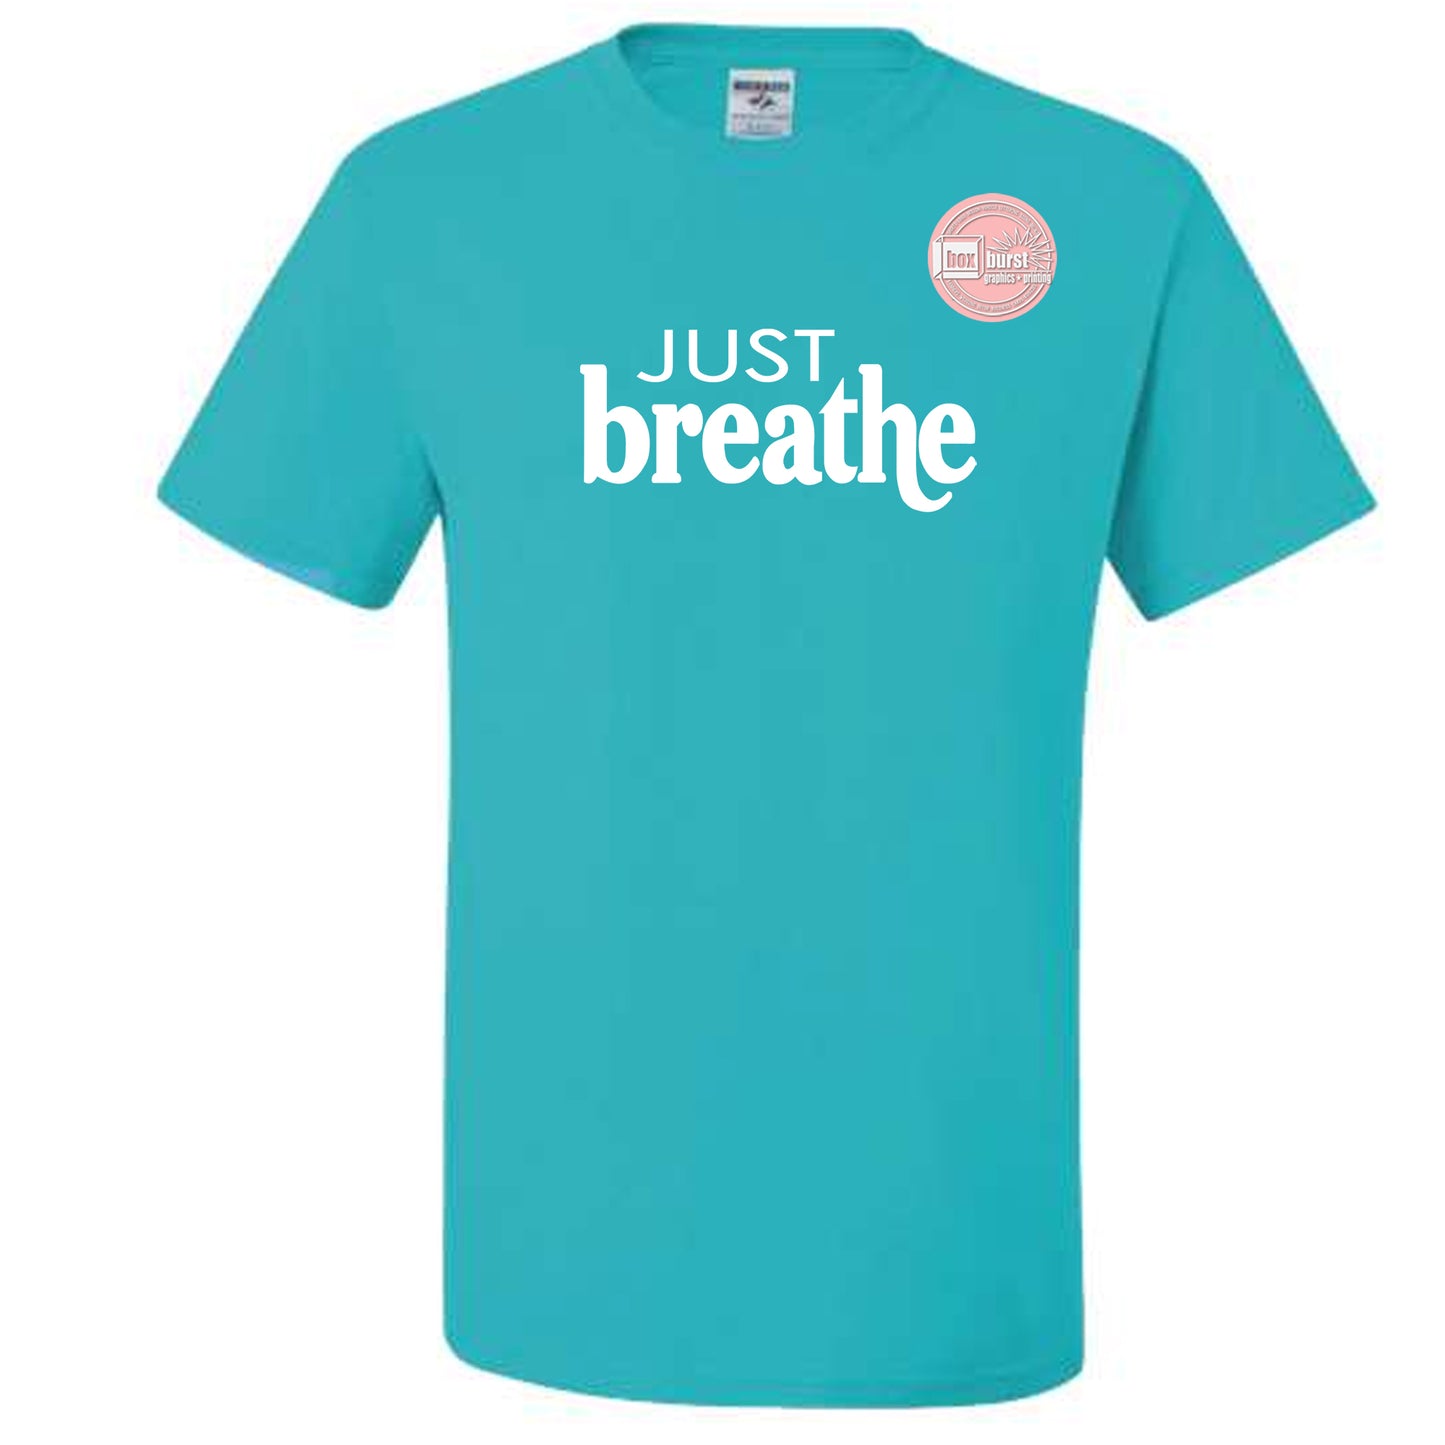 Just Breathe shirt